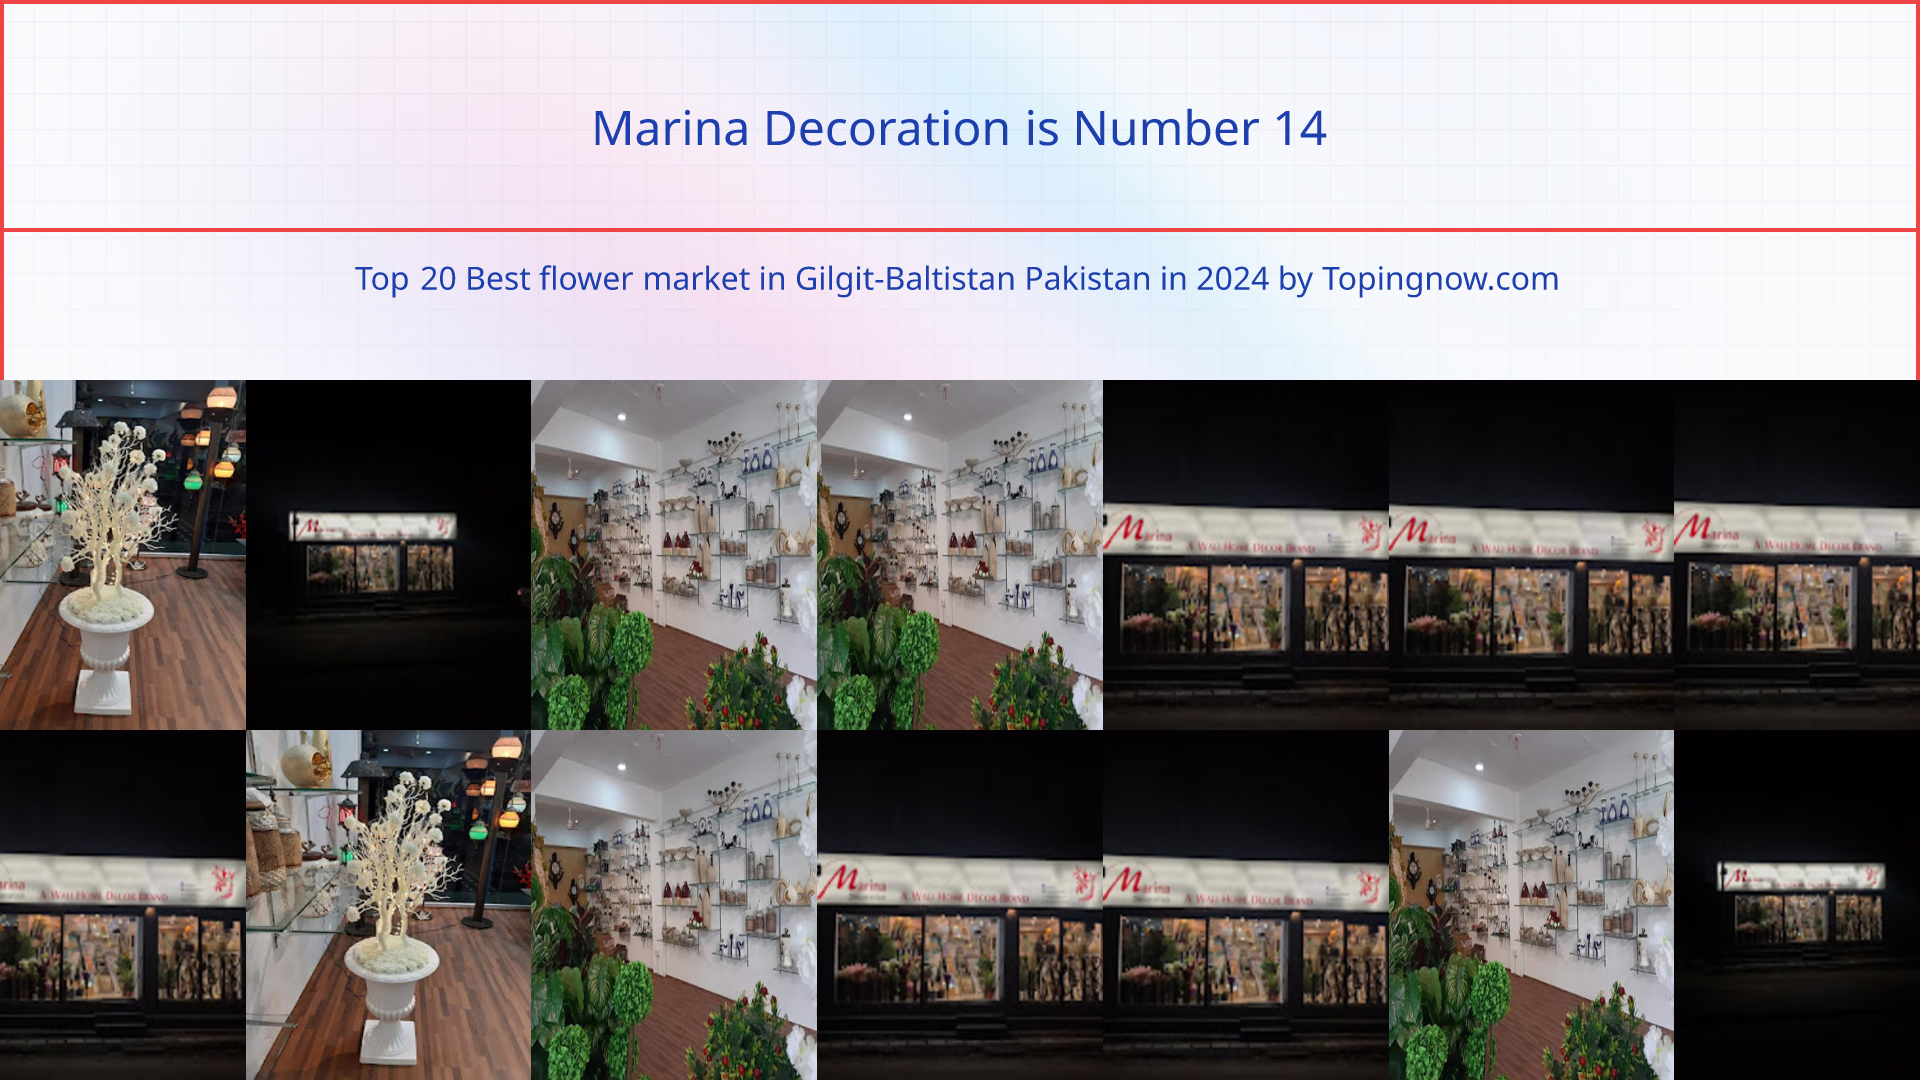 Marina Decoration: Top 20 Best flower market in Gilgit-Baltistan Pakistan in 2024